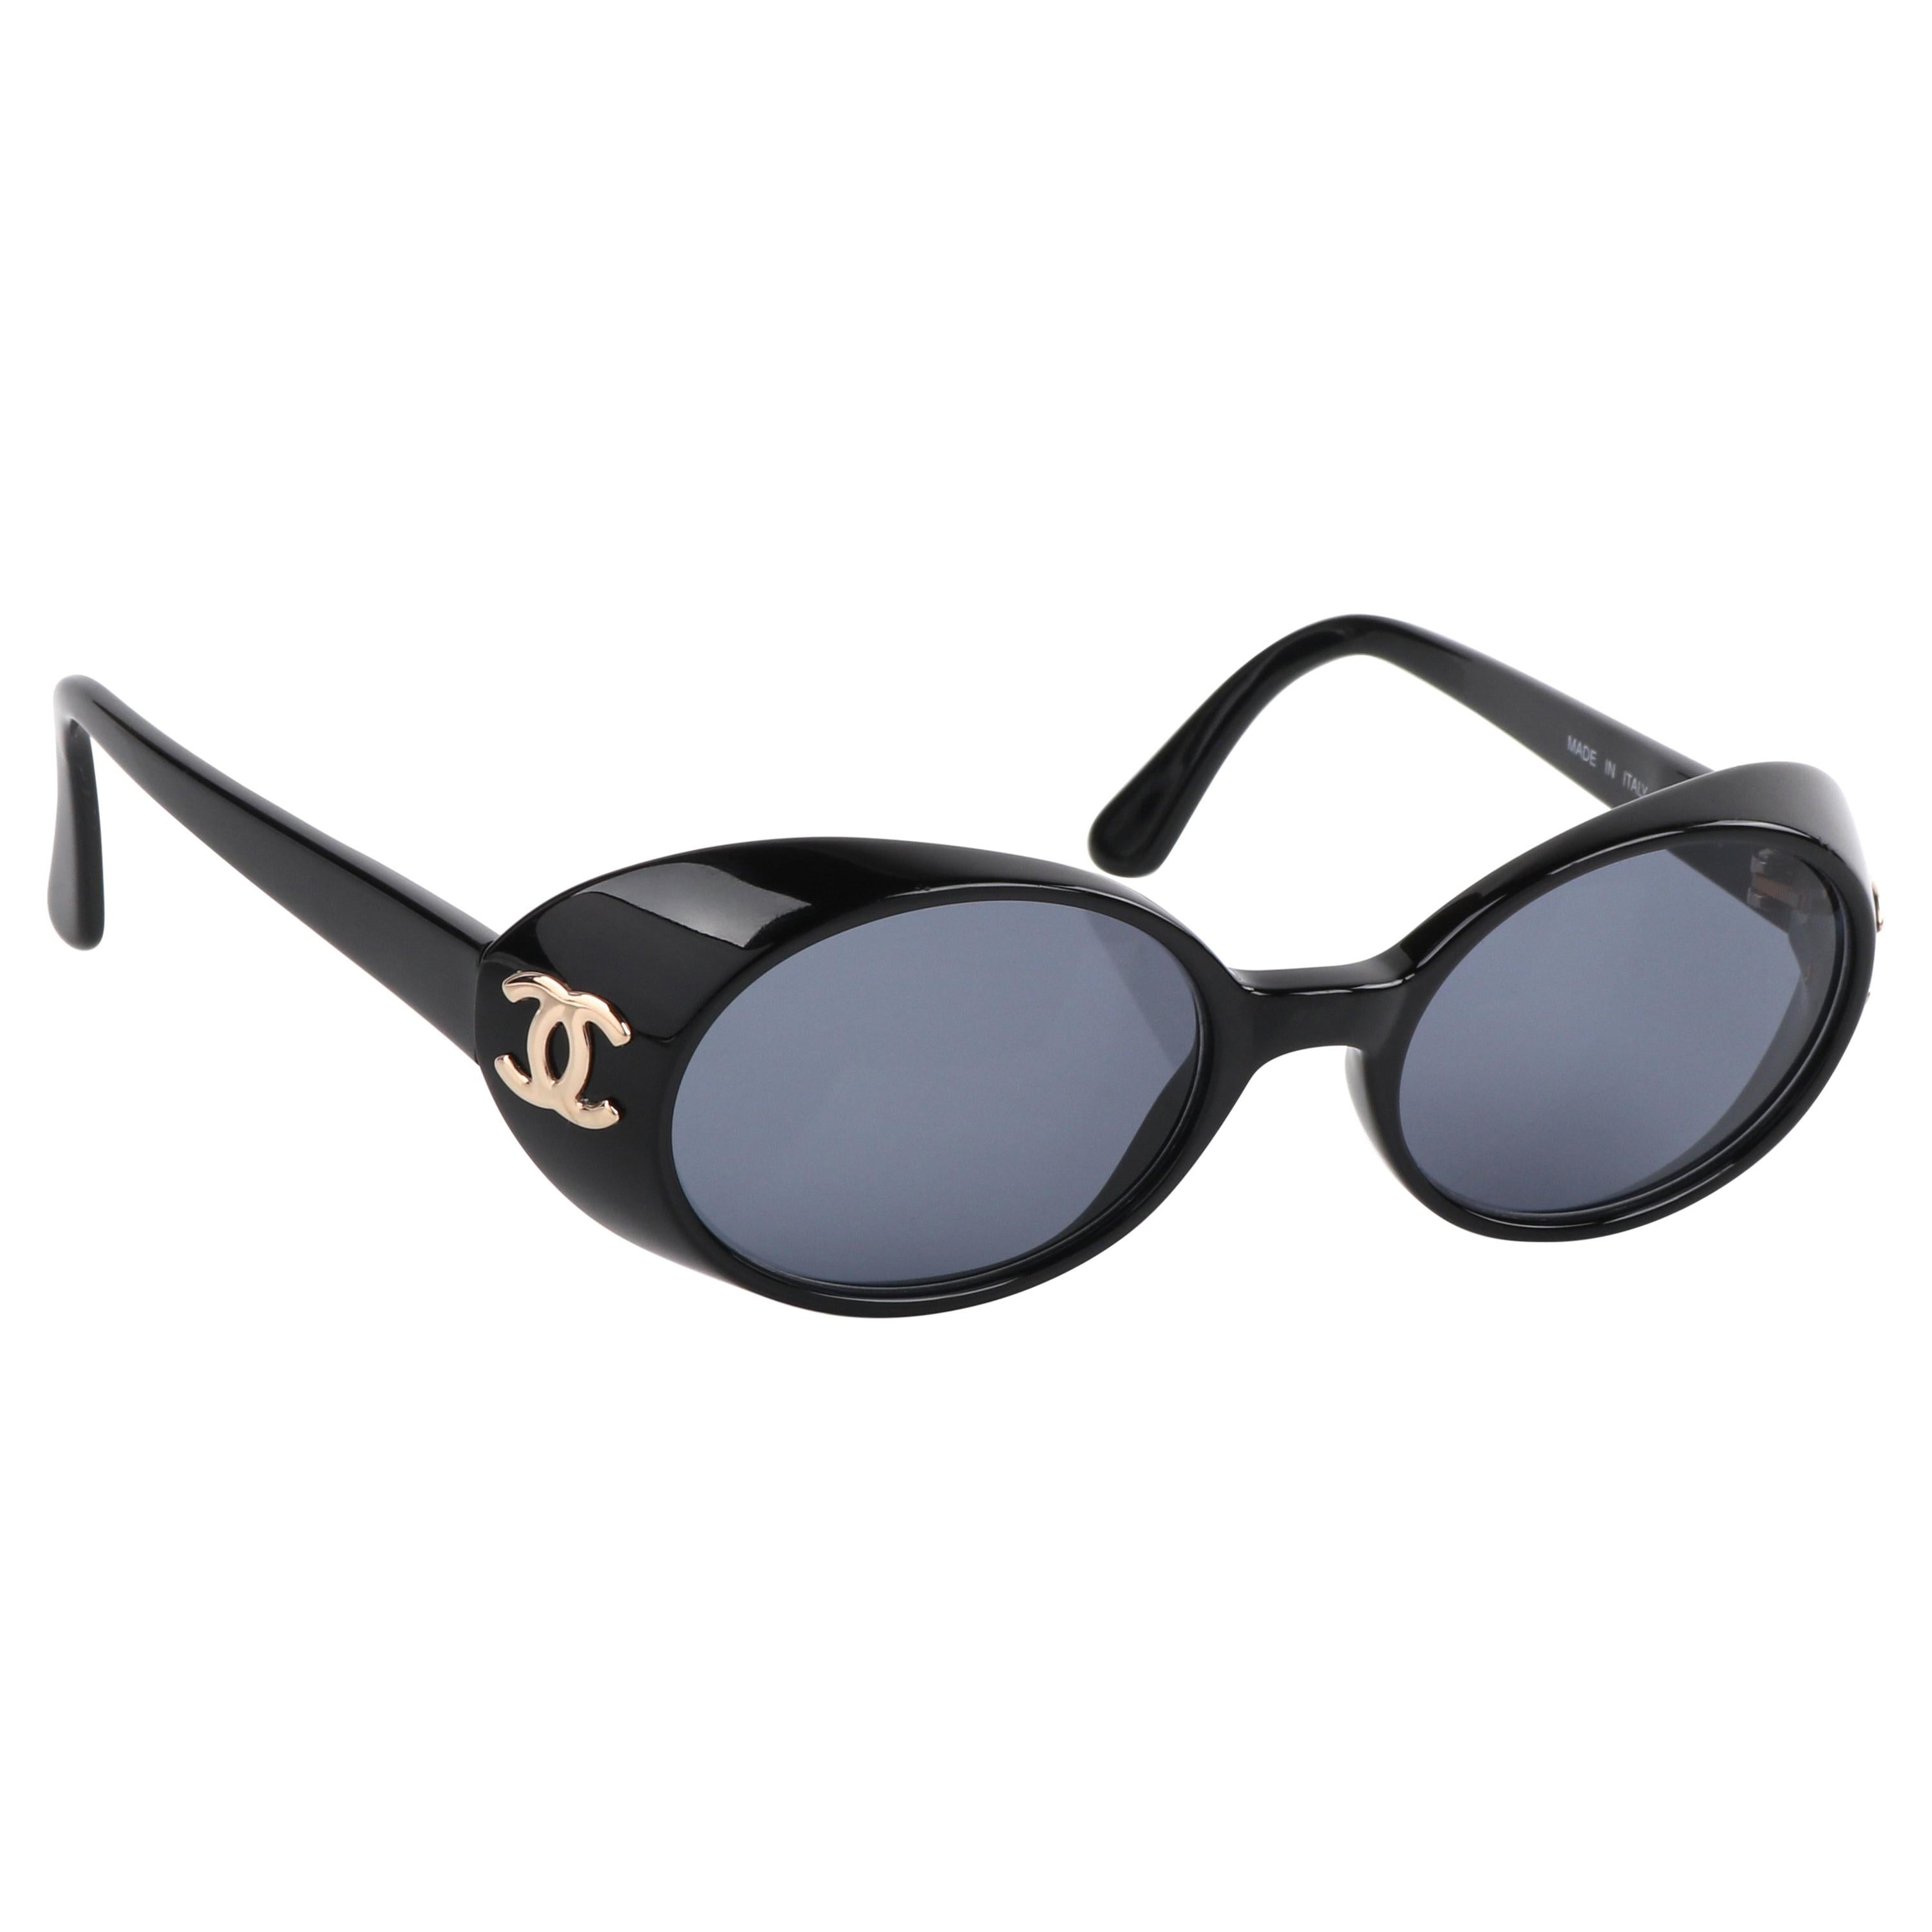 chanel black frame sunglasses used